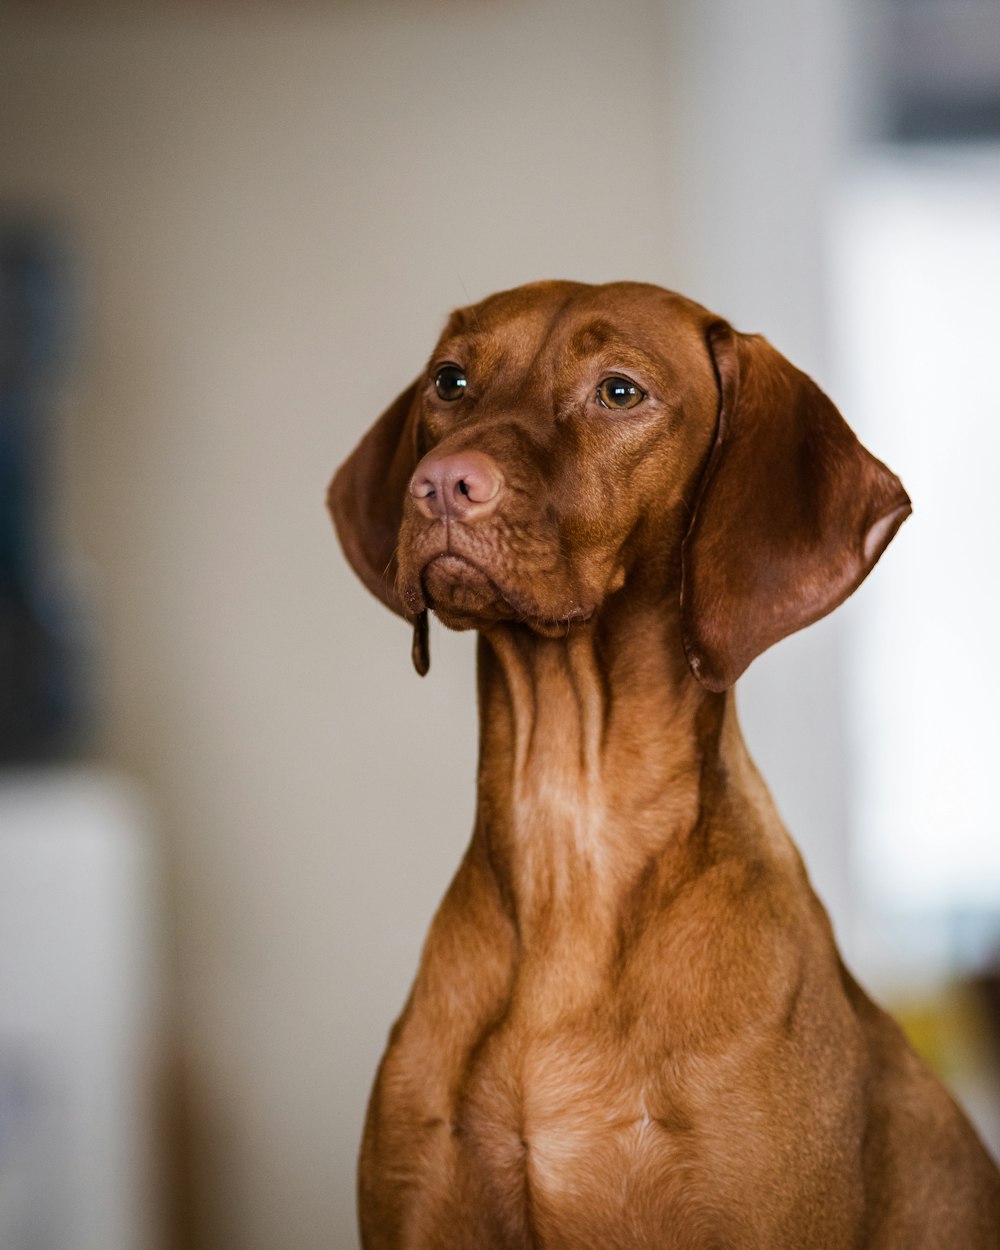 brown short coated dog looking at the camera